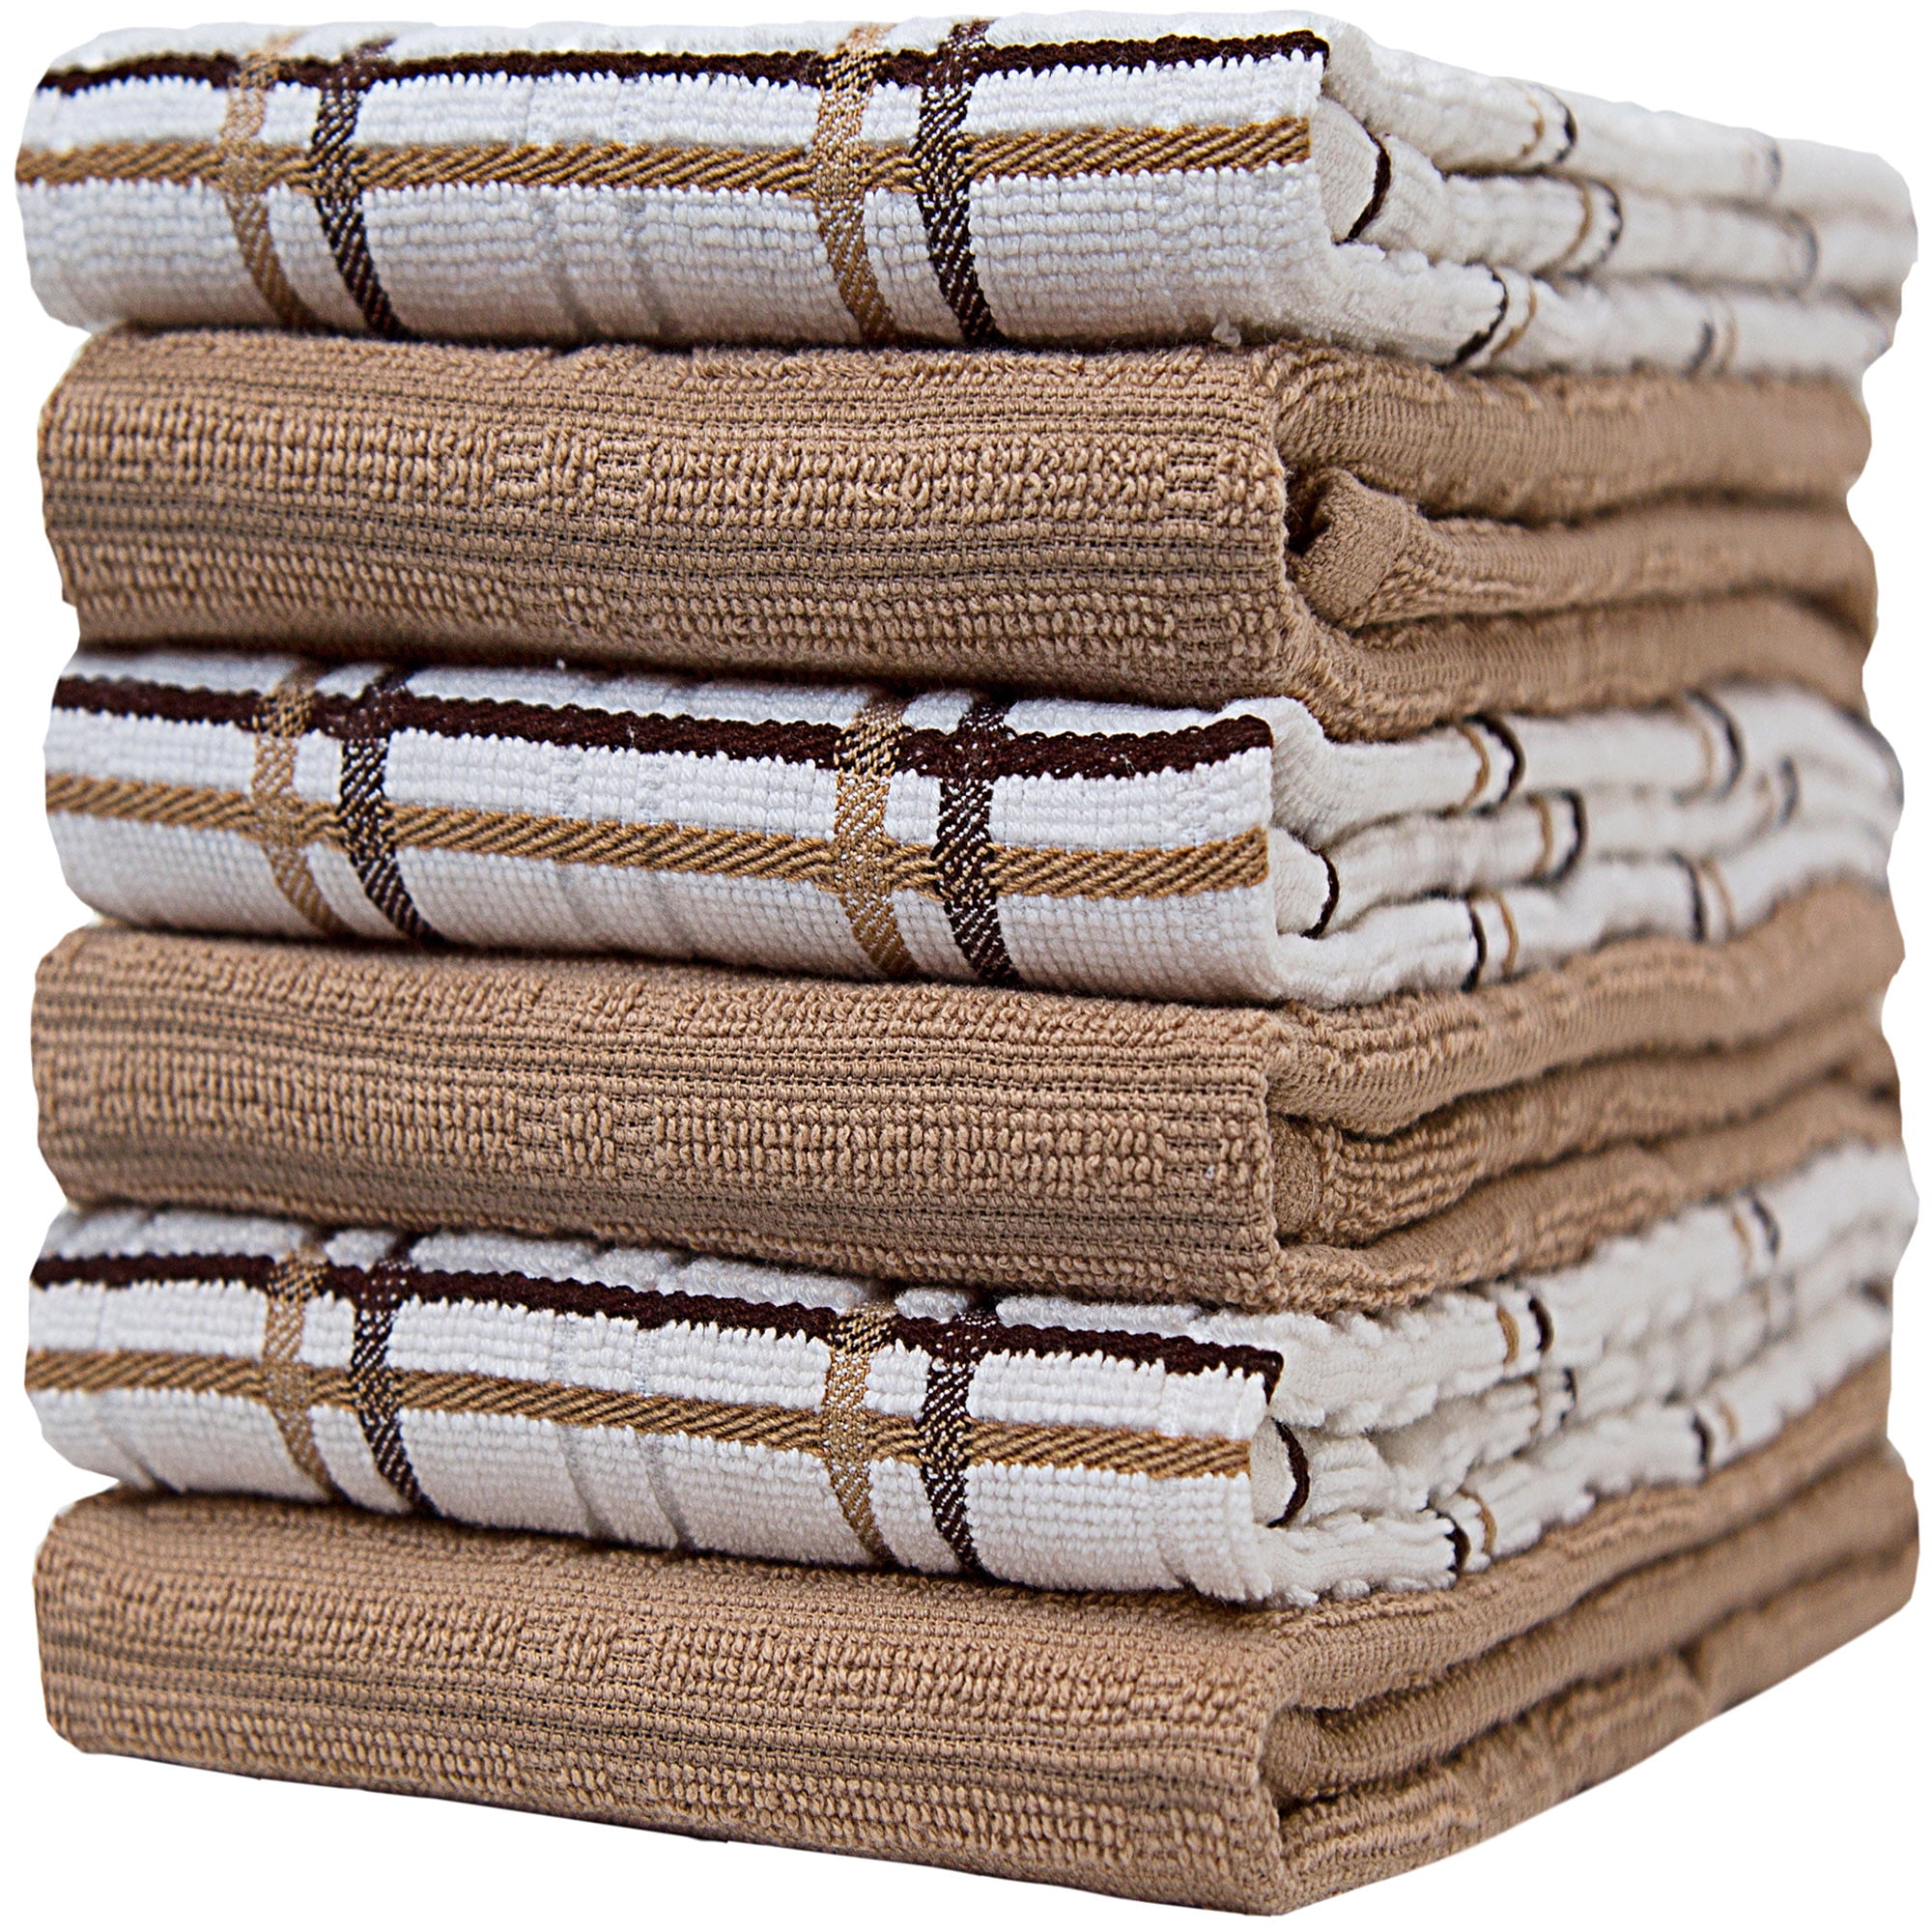 Premium Kitchen Towels (16”x 26”, 6 Pack) – Large Cotton Kitchen Hand